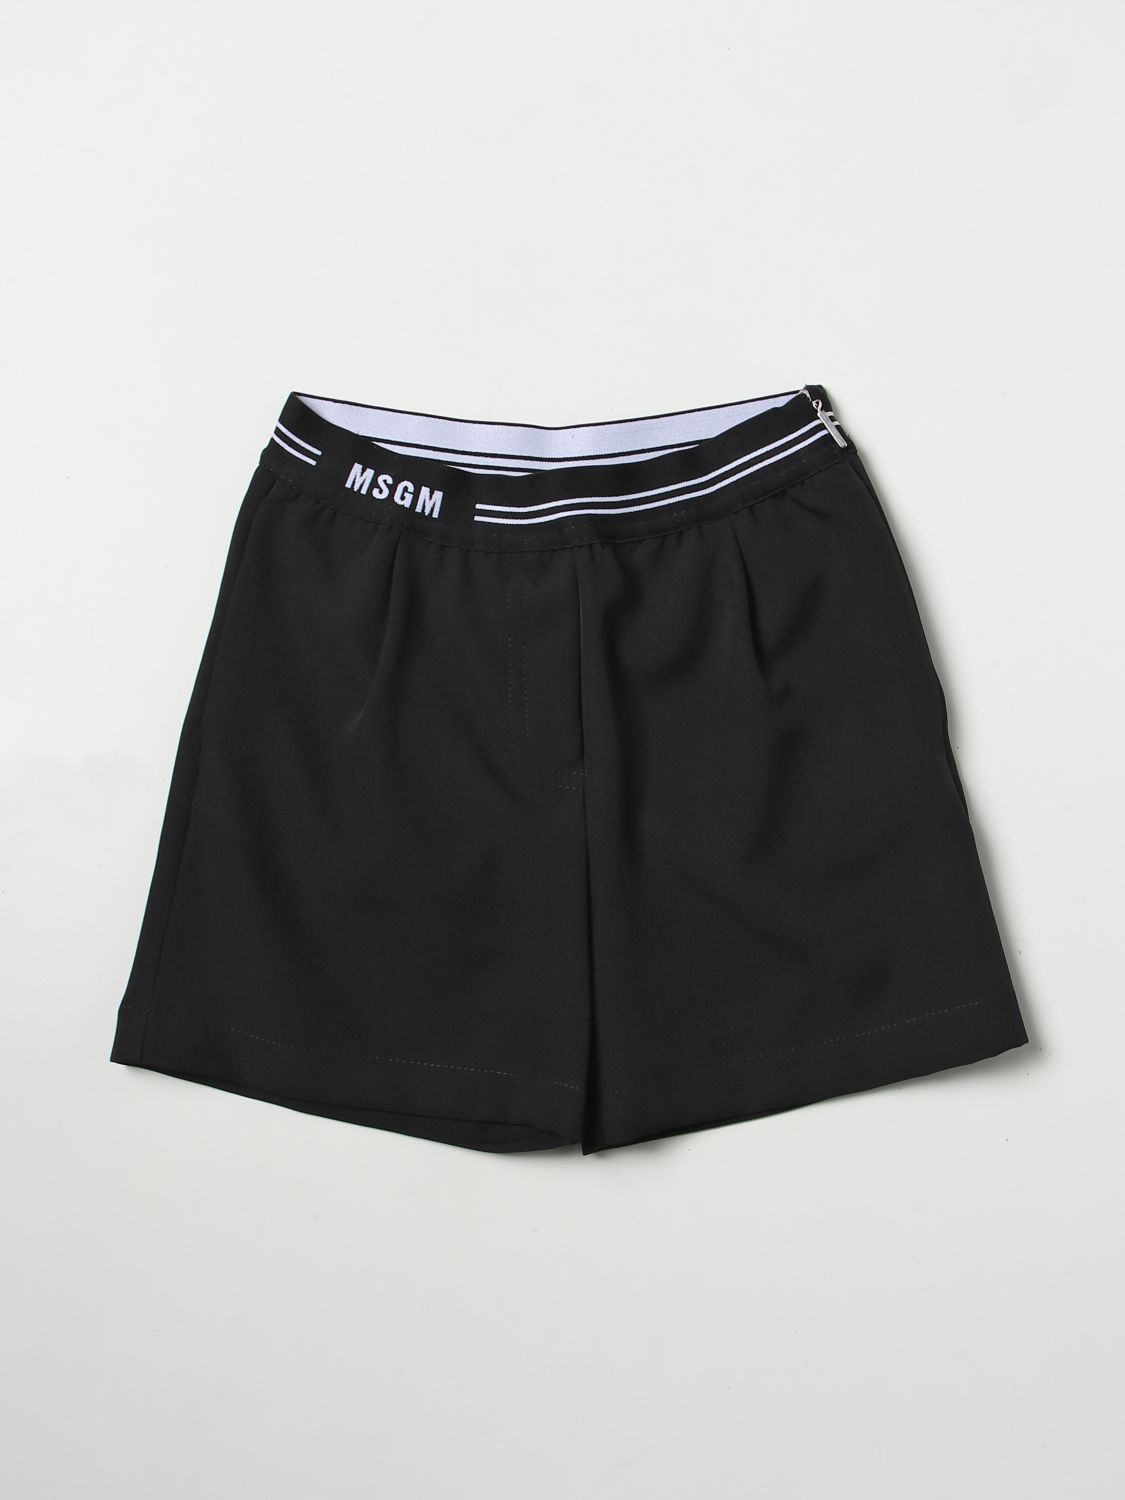 Msgm Teen Girls Black Logo Shorts